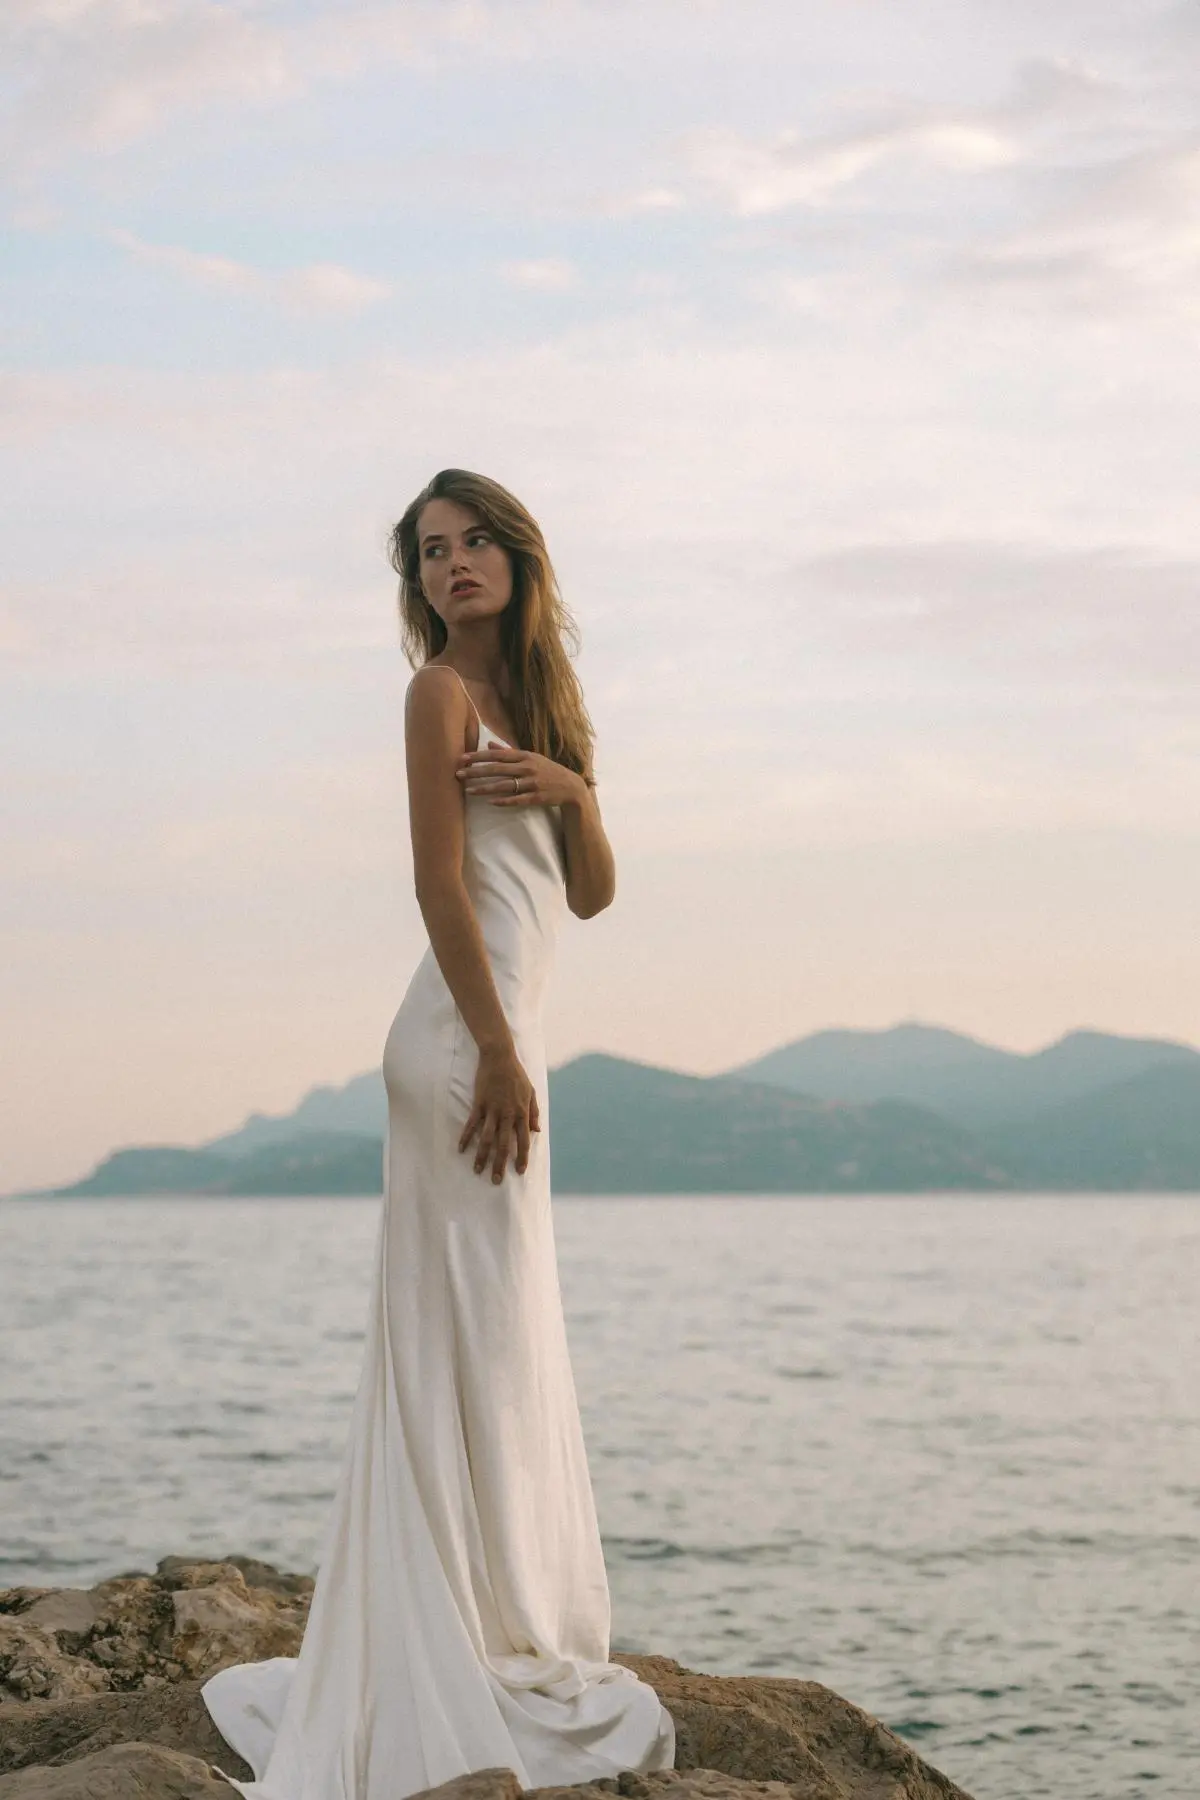 Beach Wedding Dresses: 28 Sexy looks + FAQs